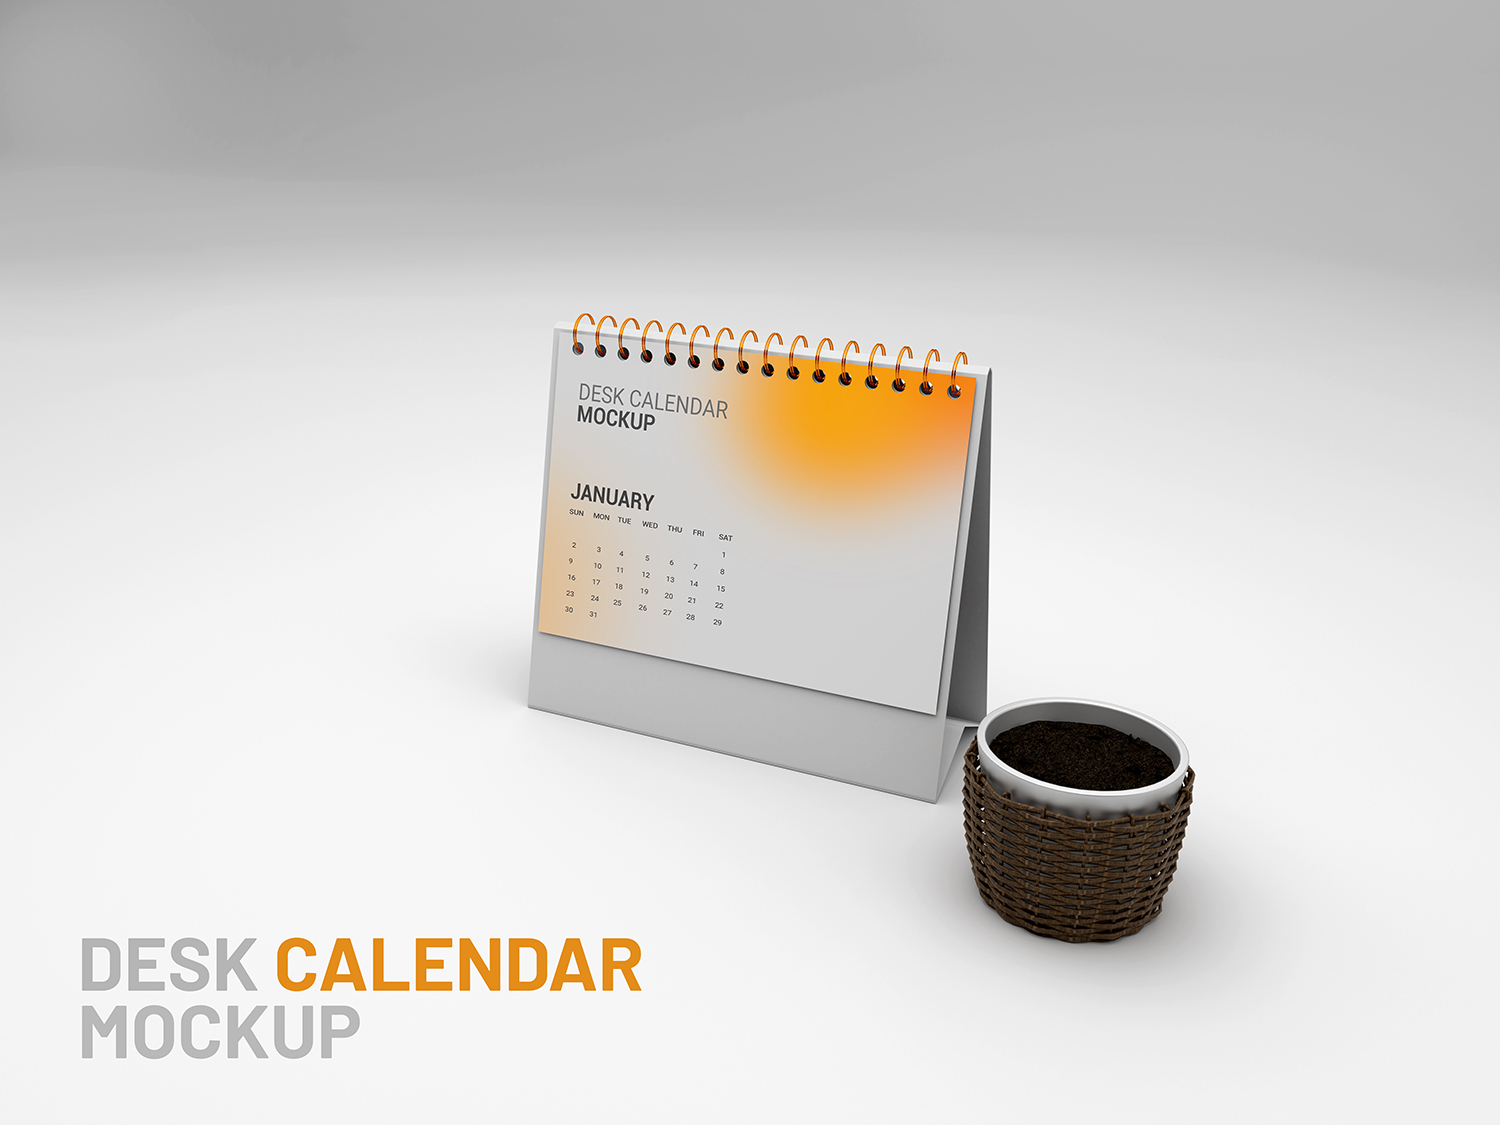 7 Desk Calendar PSD Mockup, well organized layers.